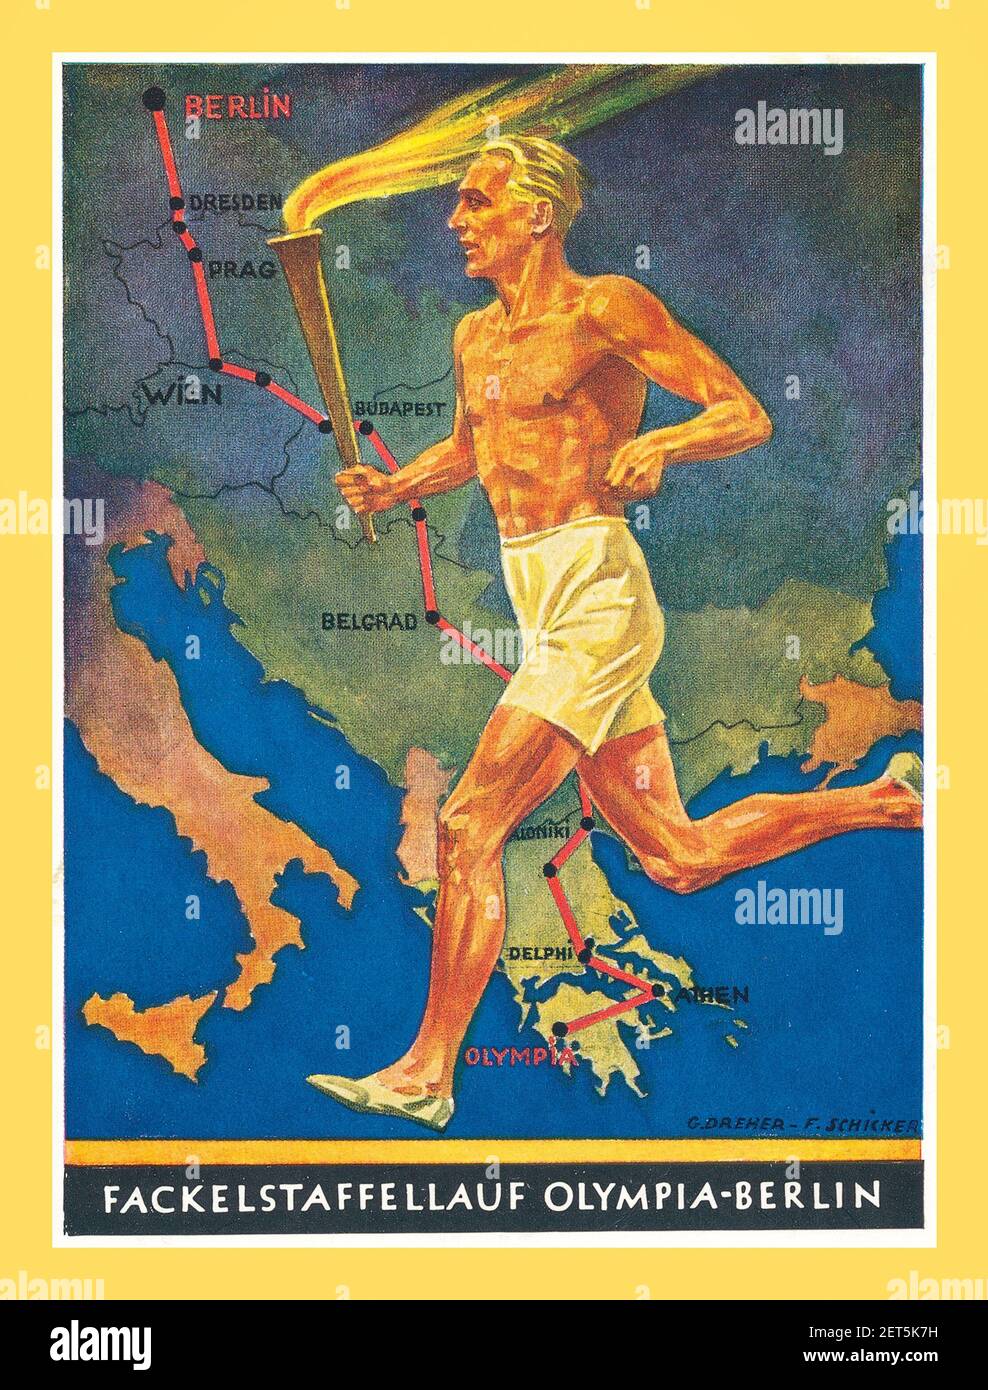 Berlin Olympics 1936 Vintage Propaganda Poster Nazi Germany Olympic Games Torch Relay run from Greece to Berlin Germany 'fackelstaffellauf Olympia-Berlin' Stock Photo